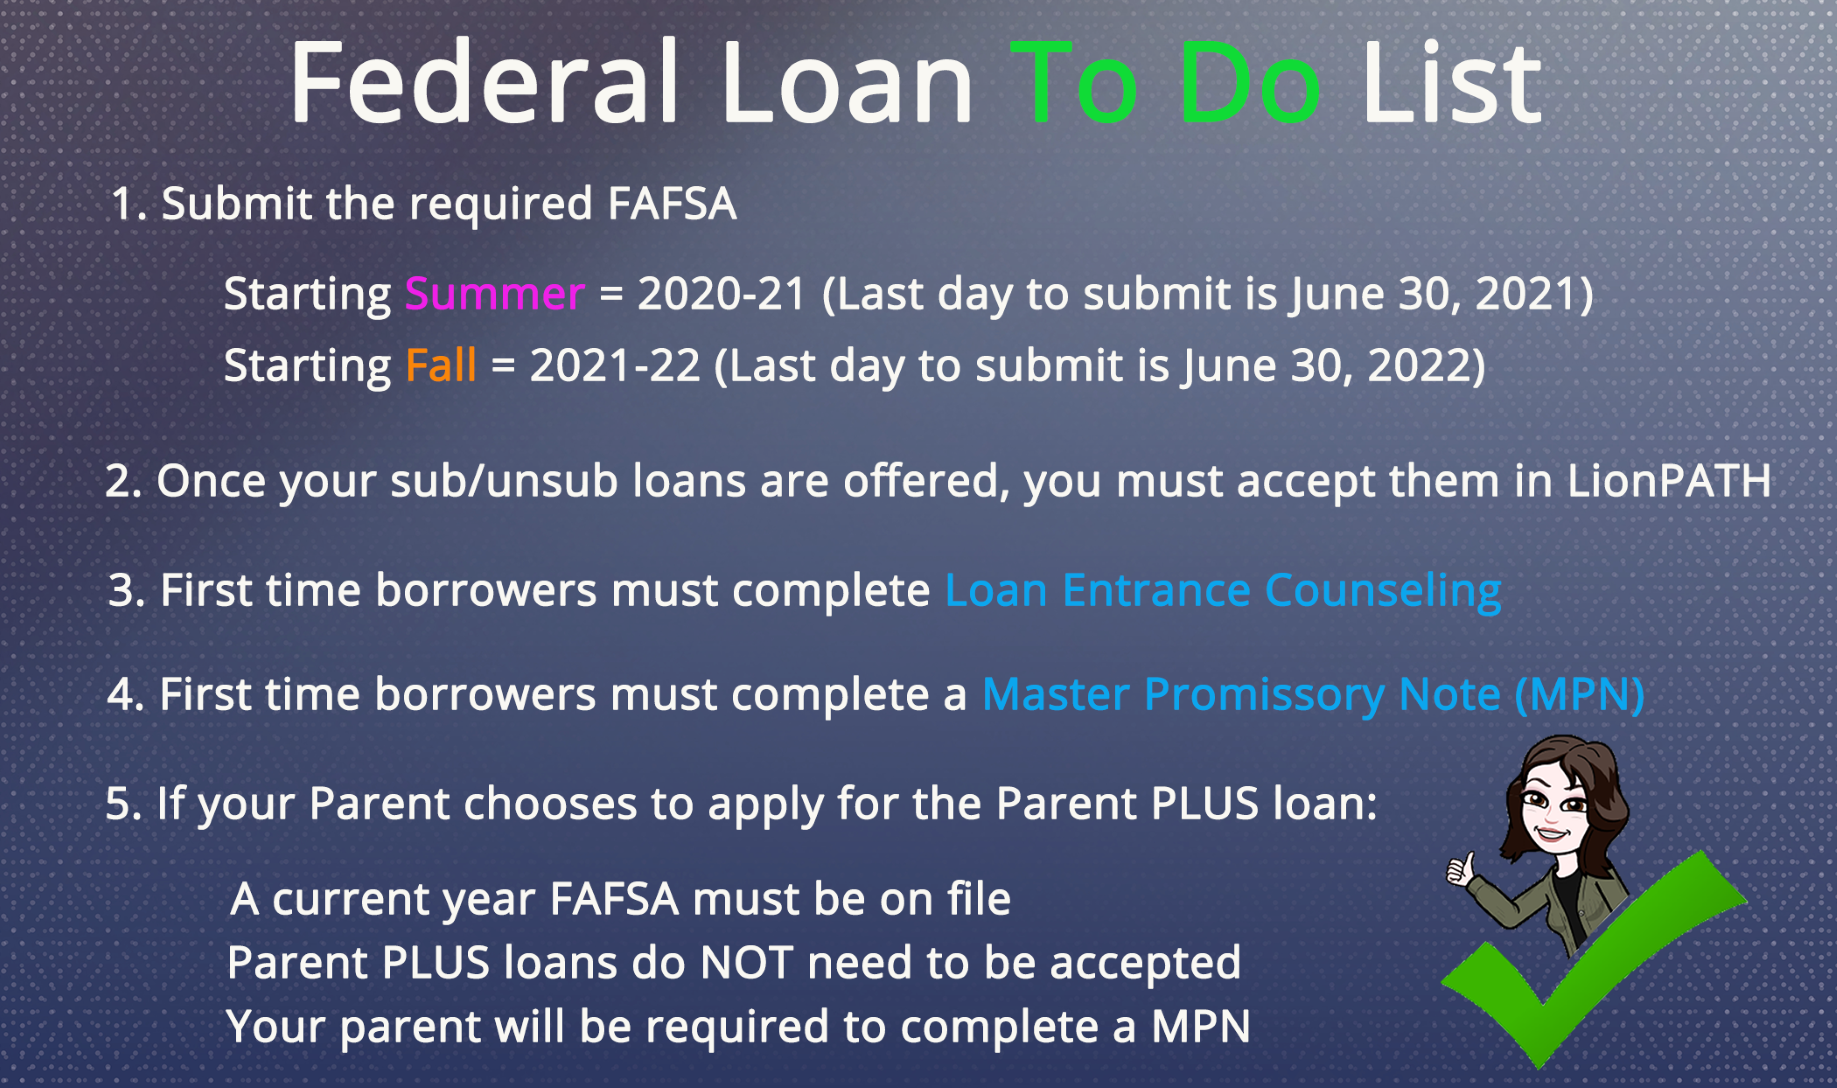 Federal Loan To Do List